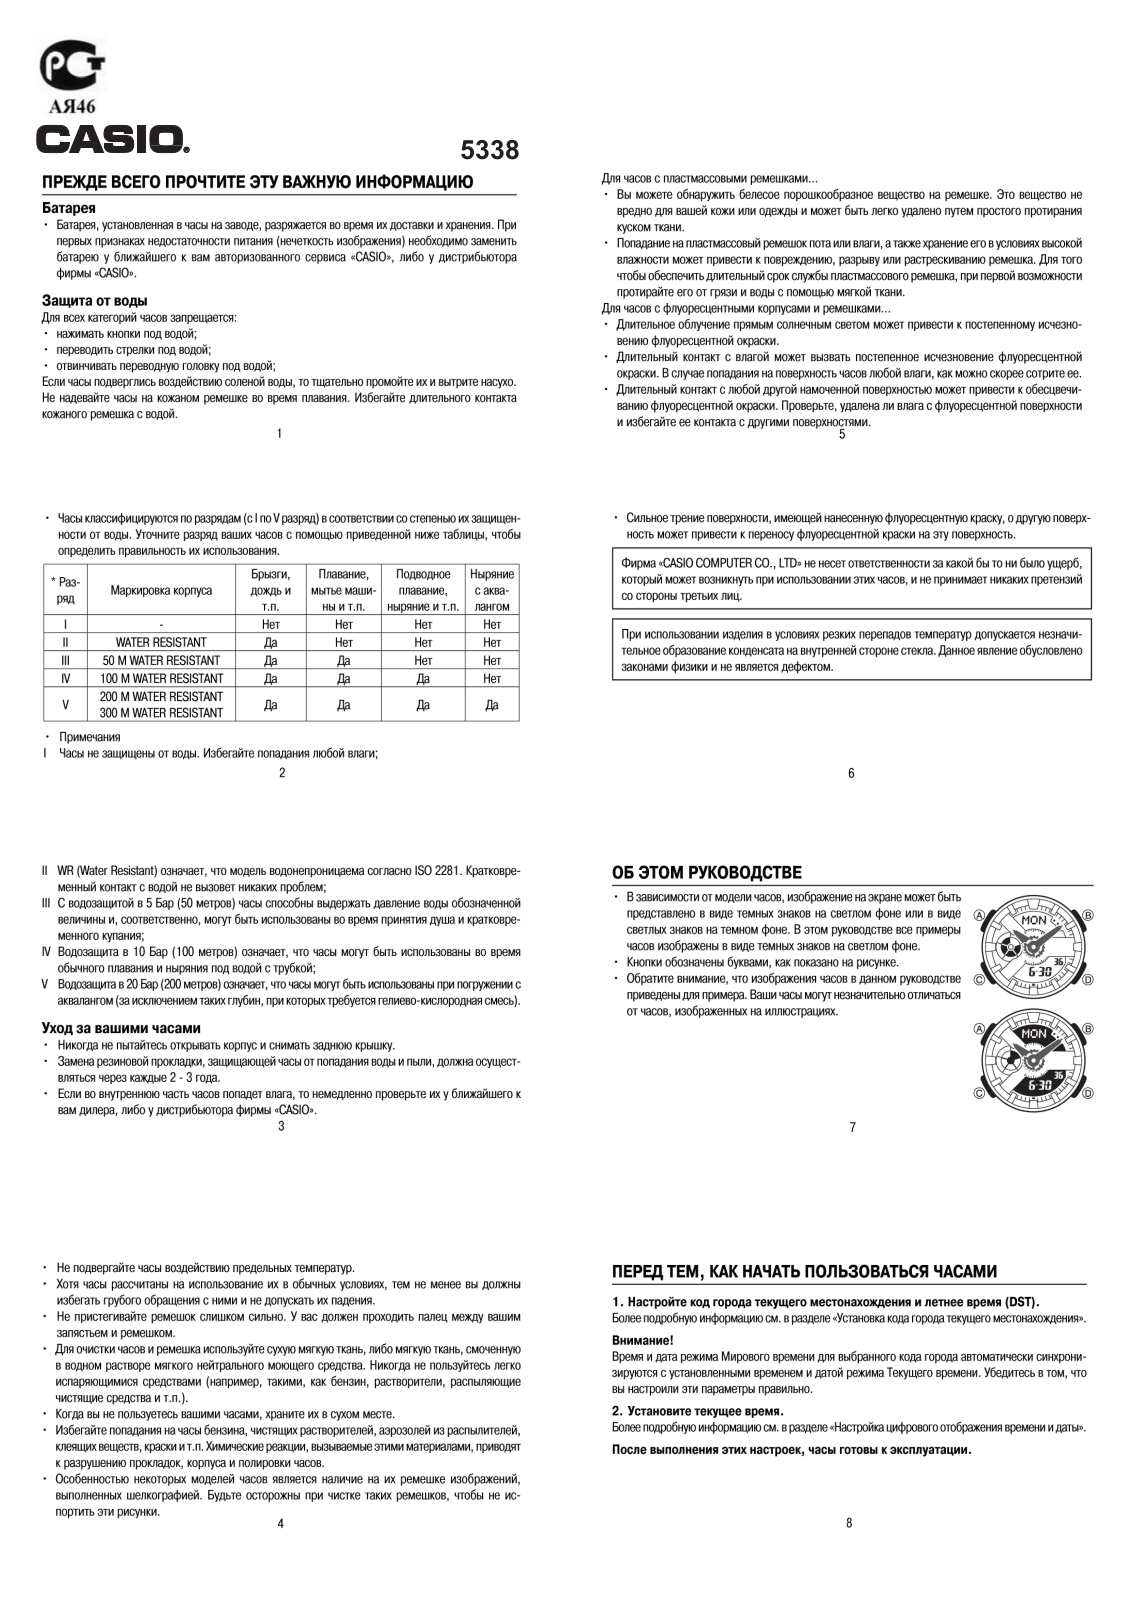 Casio BA-110RG-1AER User Manual